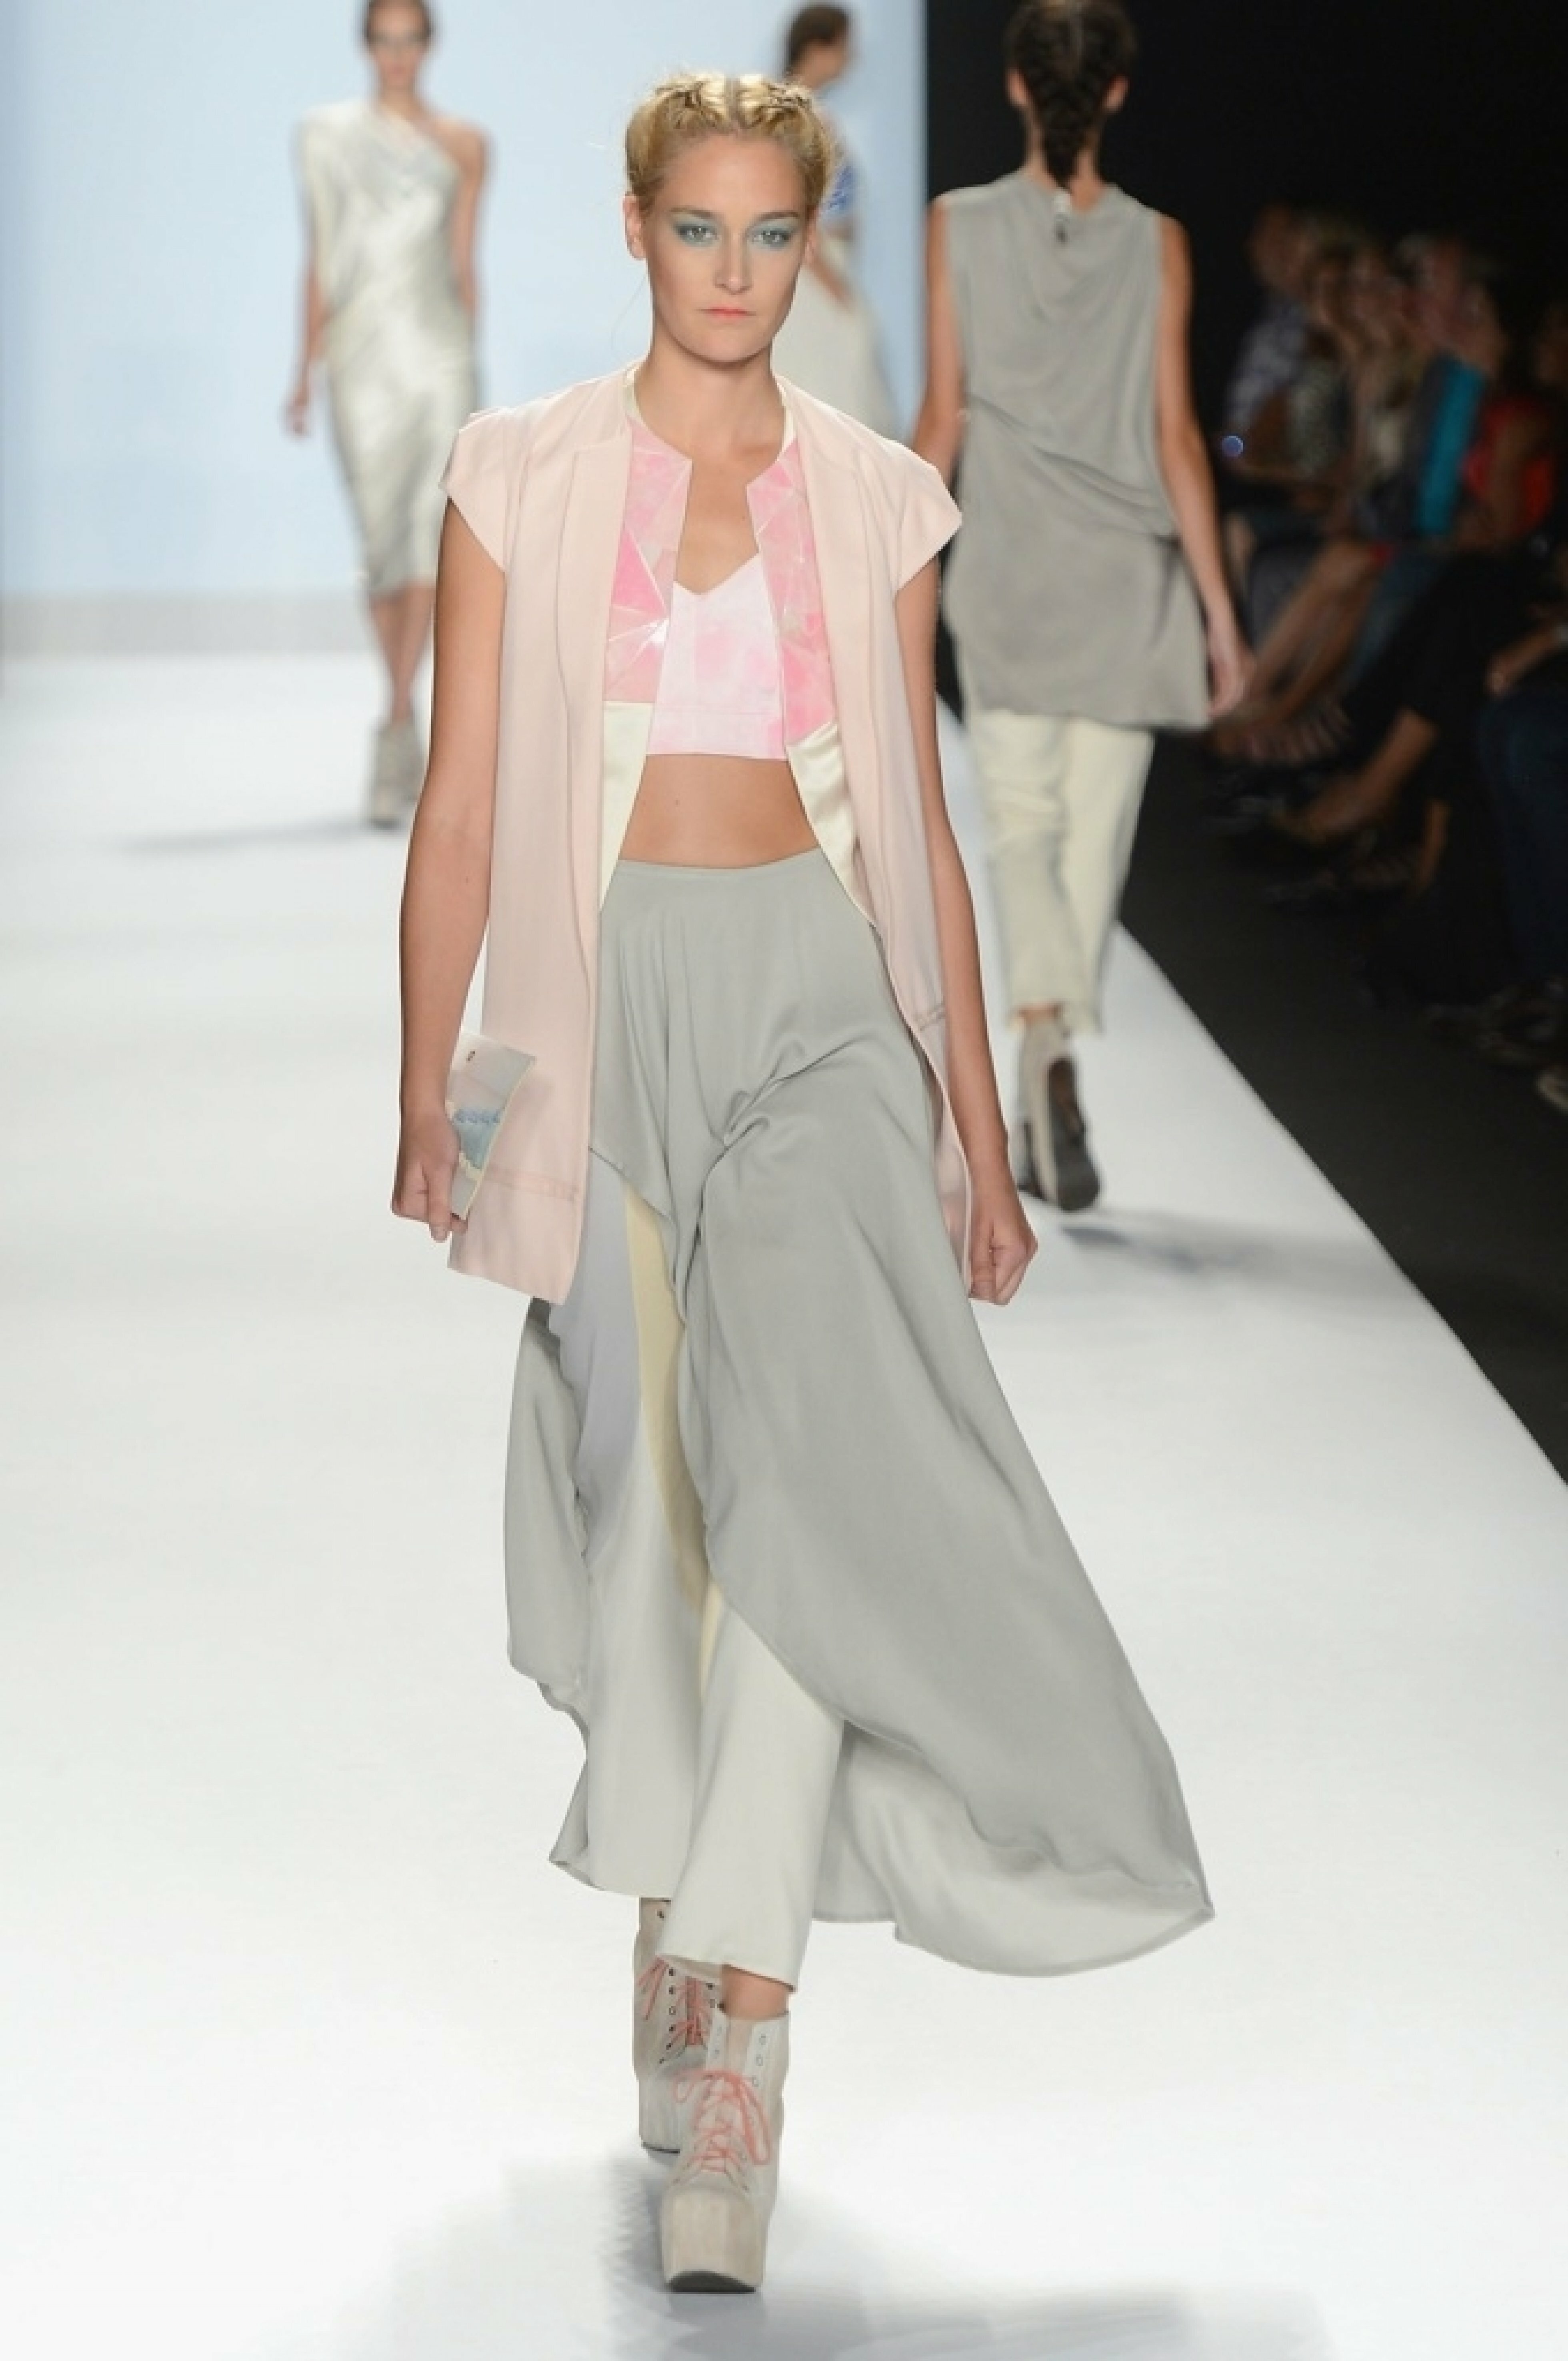 New York Fashion Week Project Runway Aniston